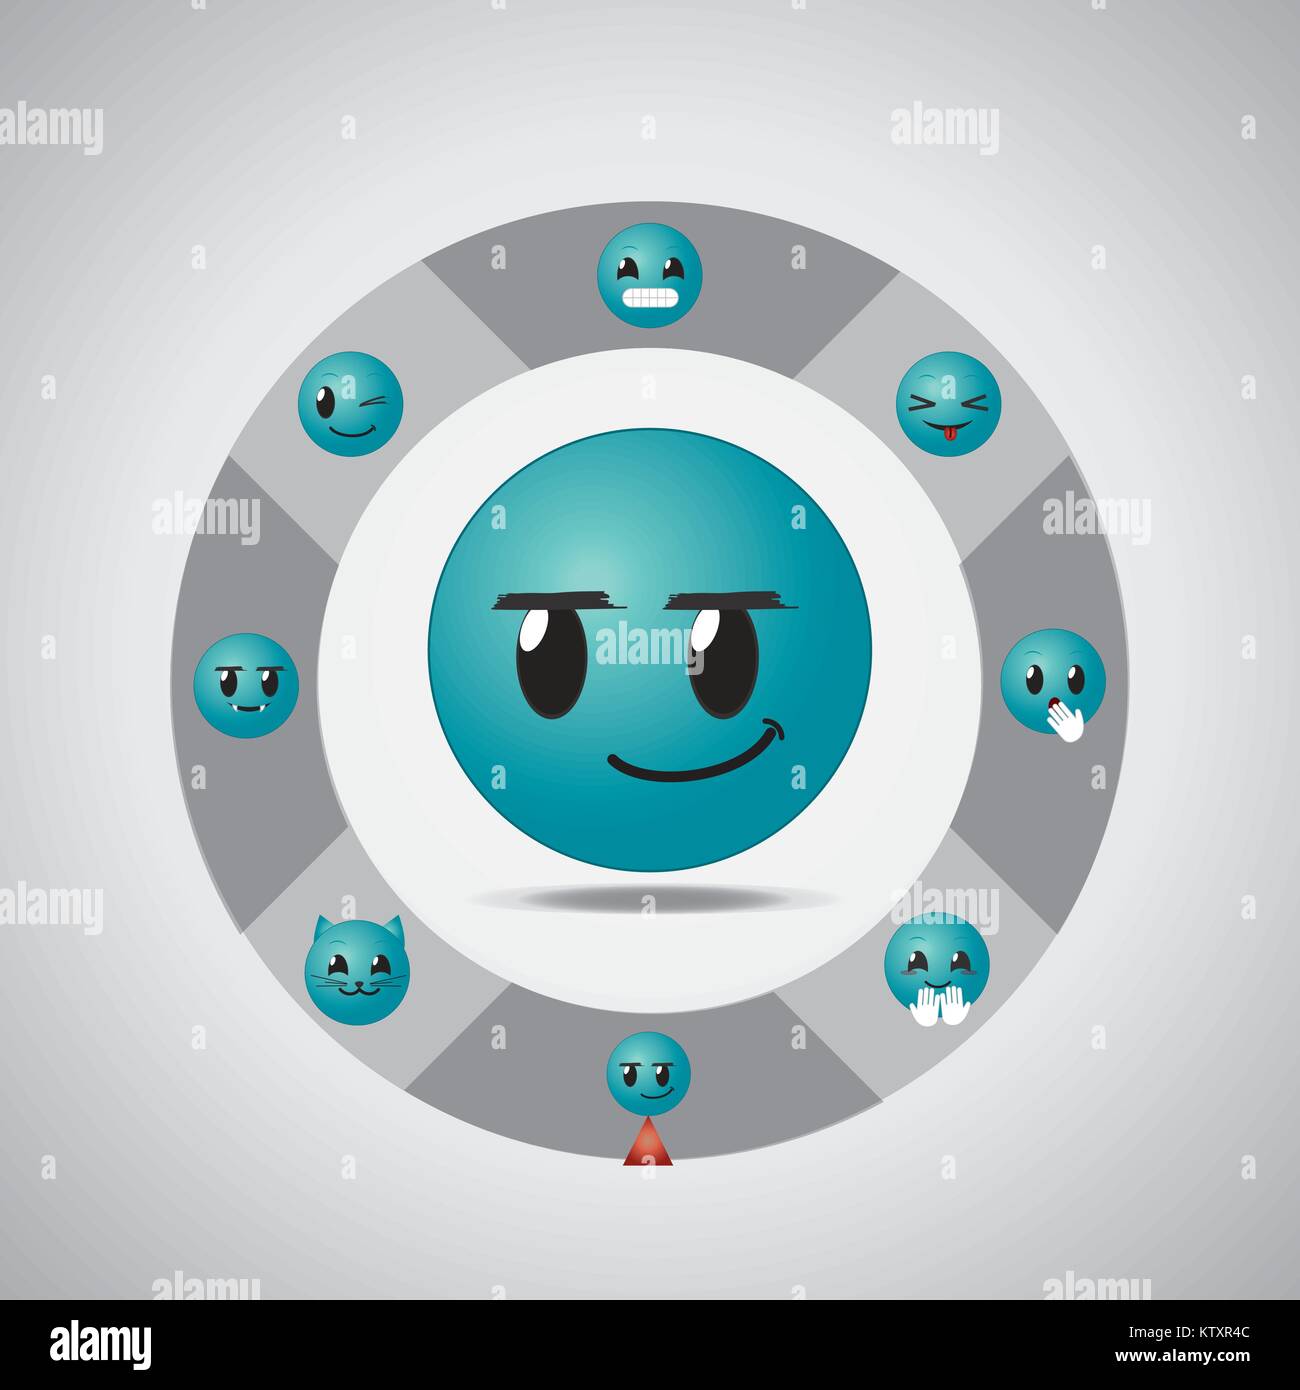 Social media emoticon design Stock Vector